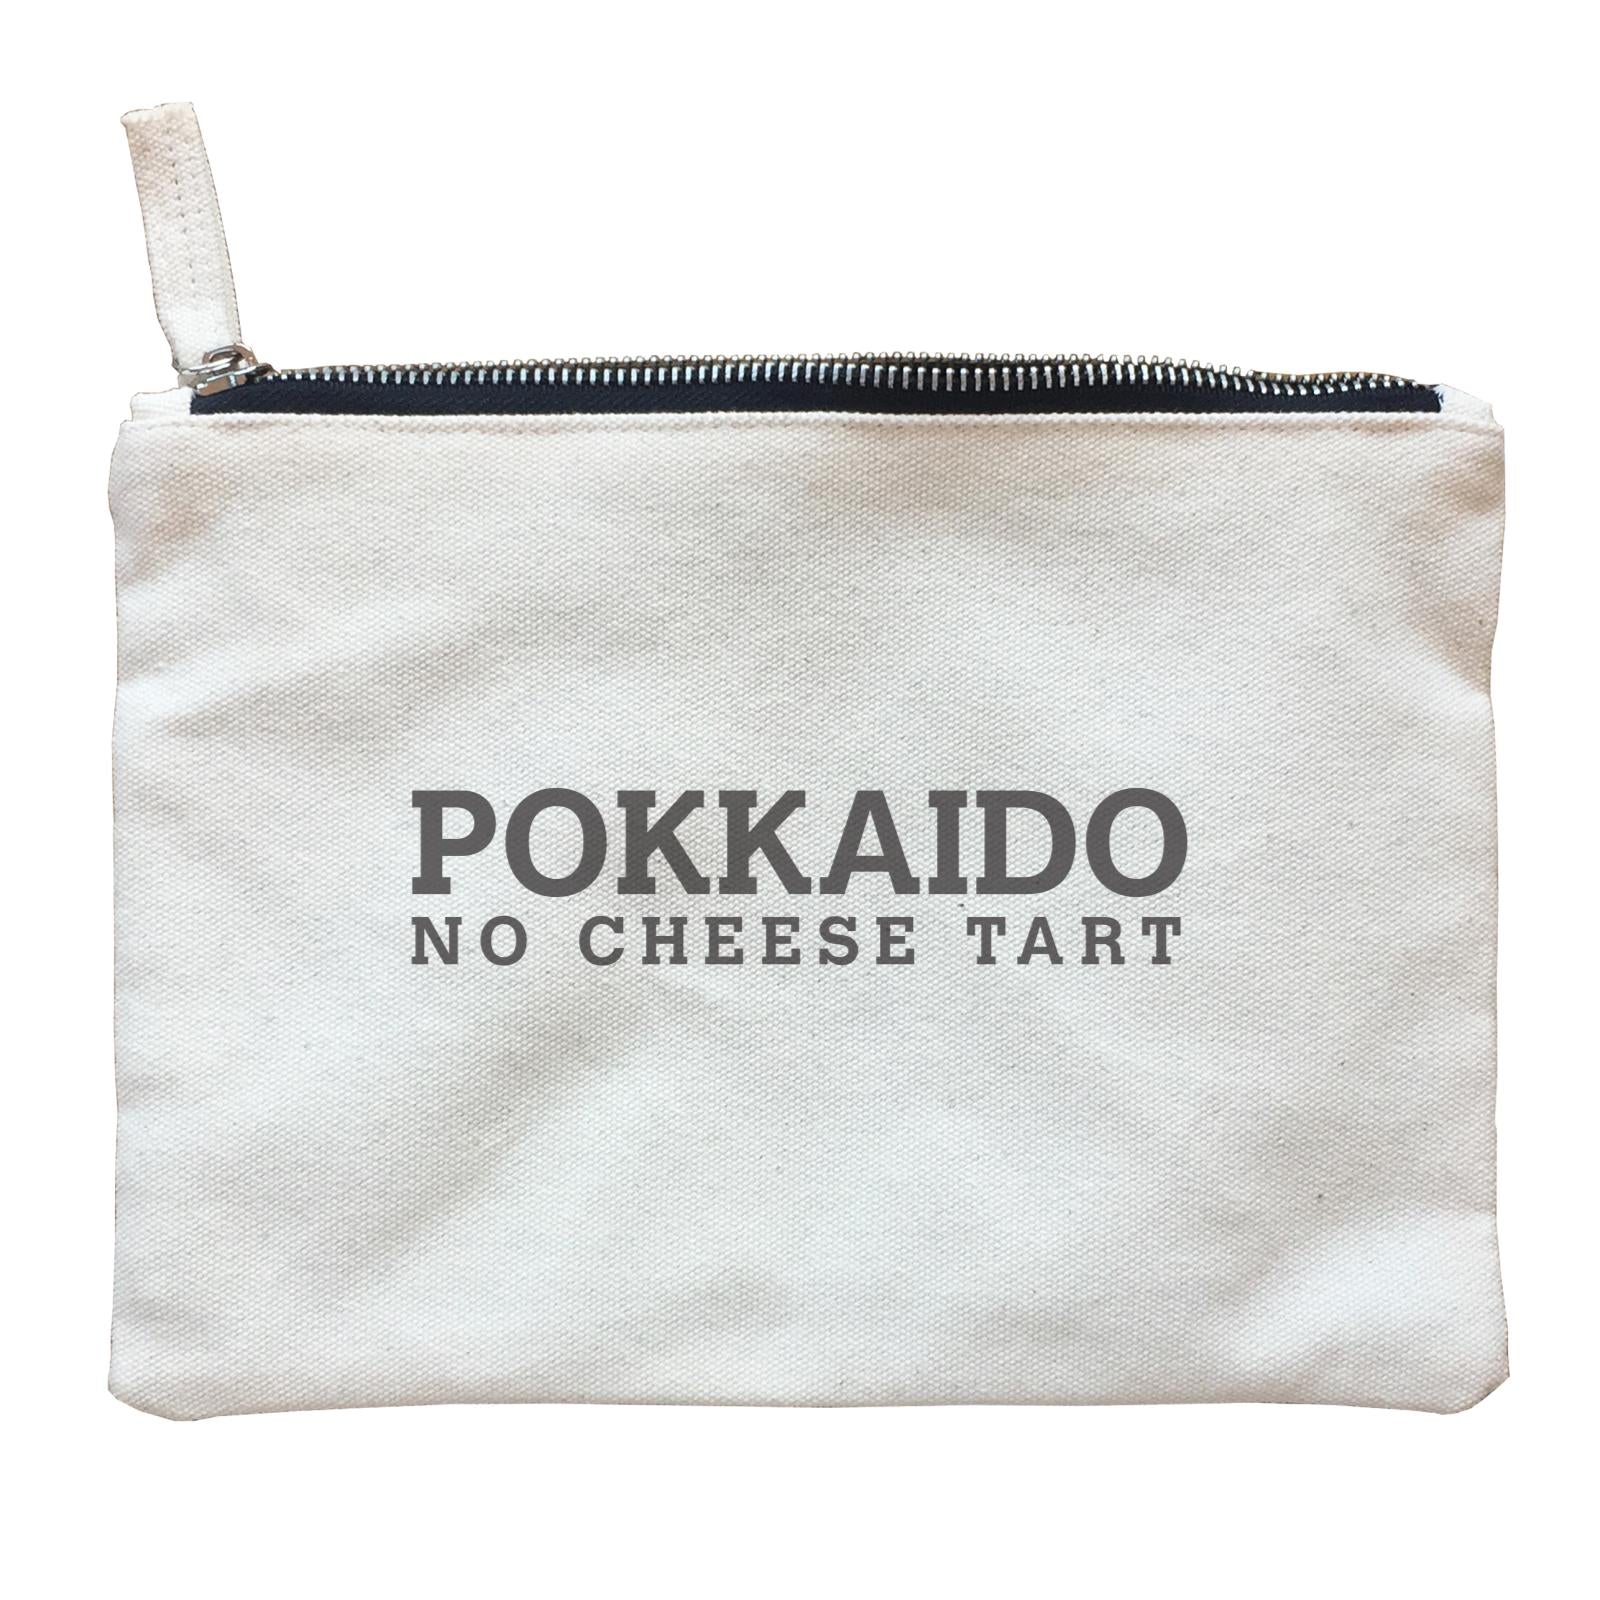 Slang Statement Pokkaido No Cheese Tart Accessories Zipper Pouch